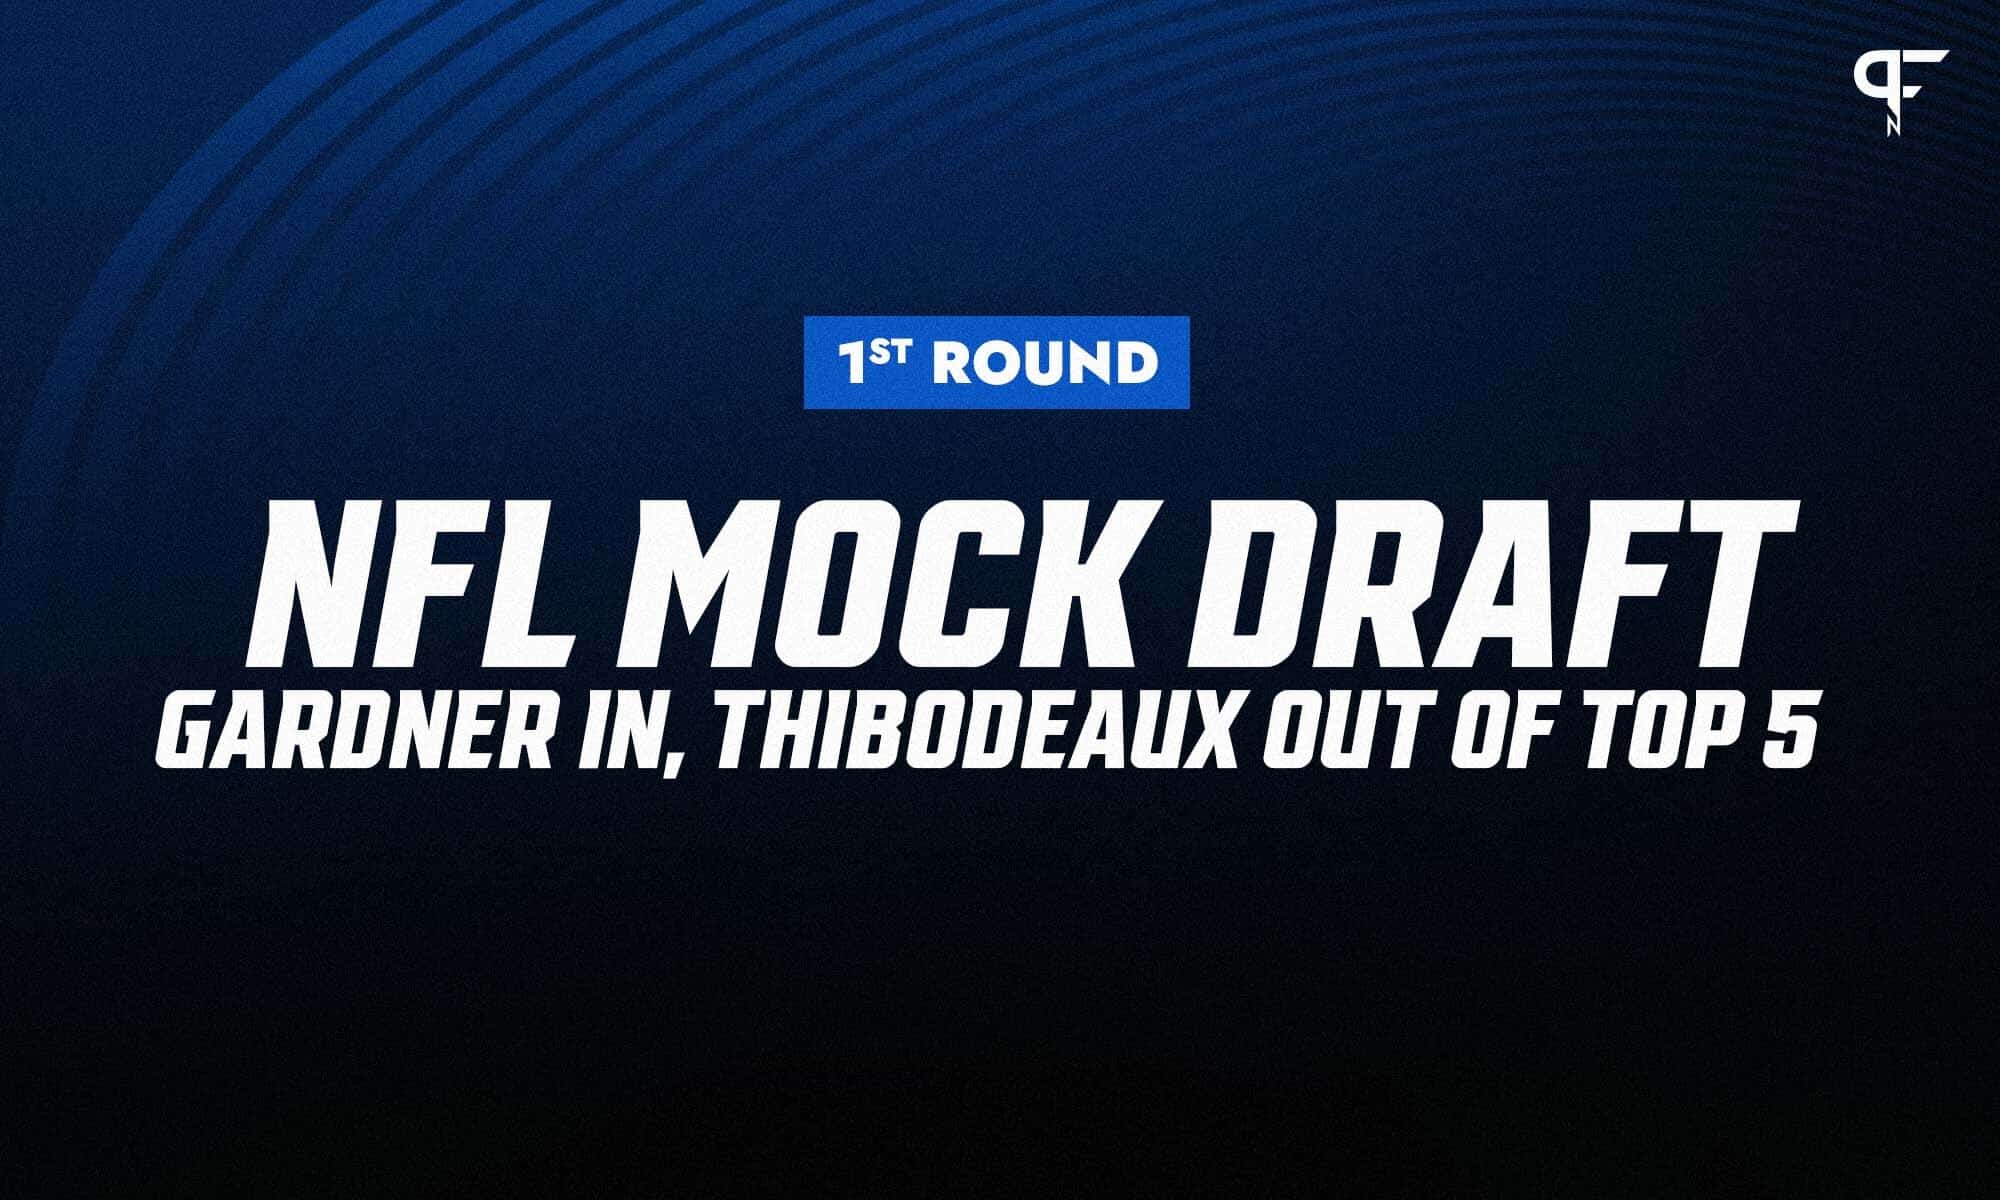 Three-round 2022 NFL mock draft for all NFC East teams, NFL Draft